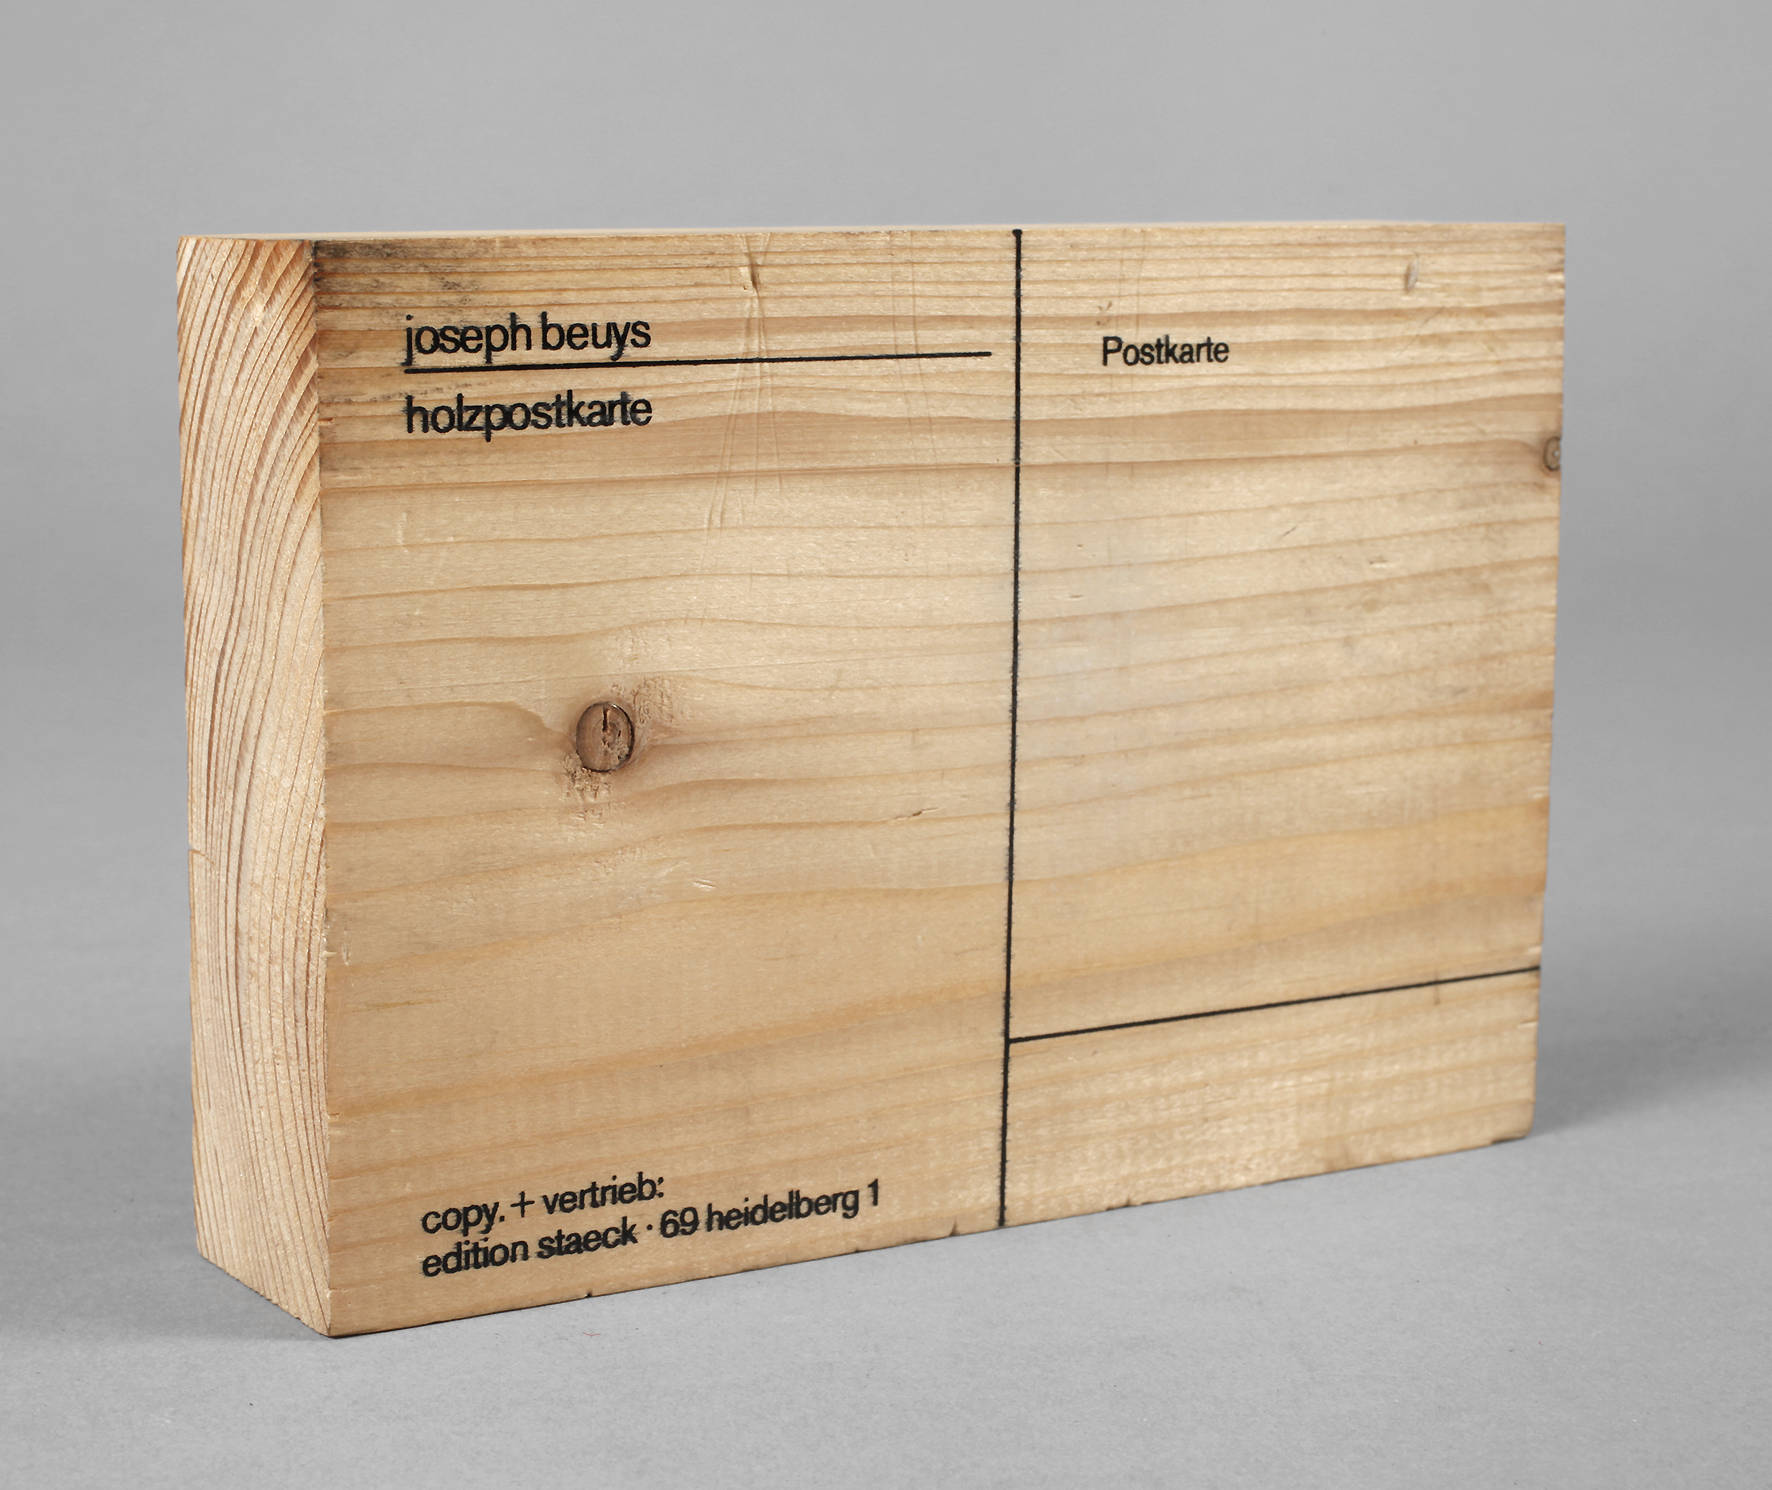 Joseph Beuys, ”Holzpostkarte”